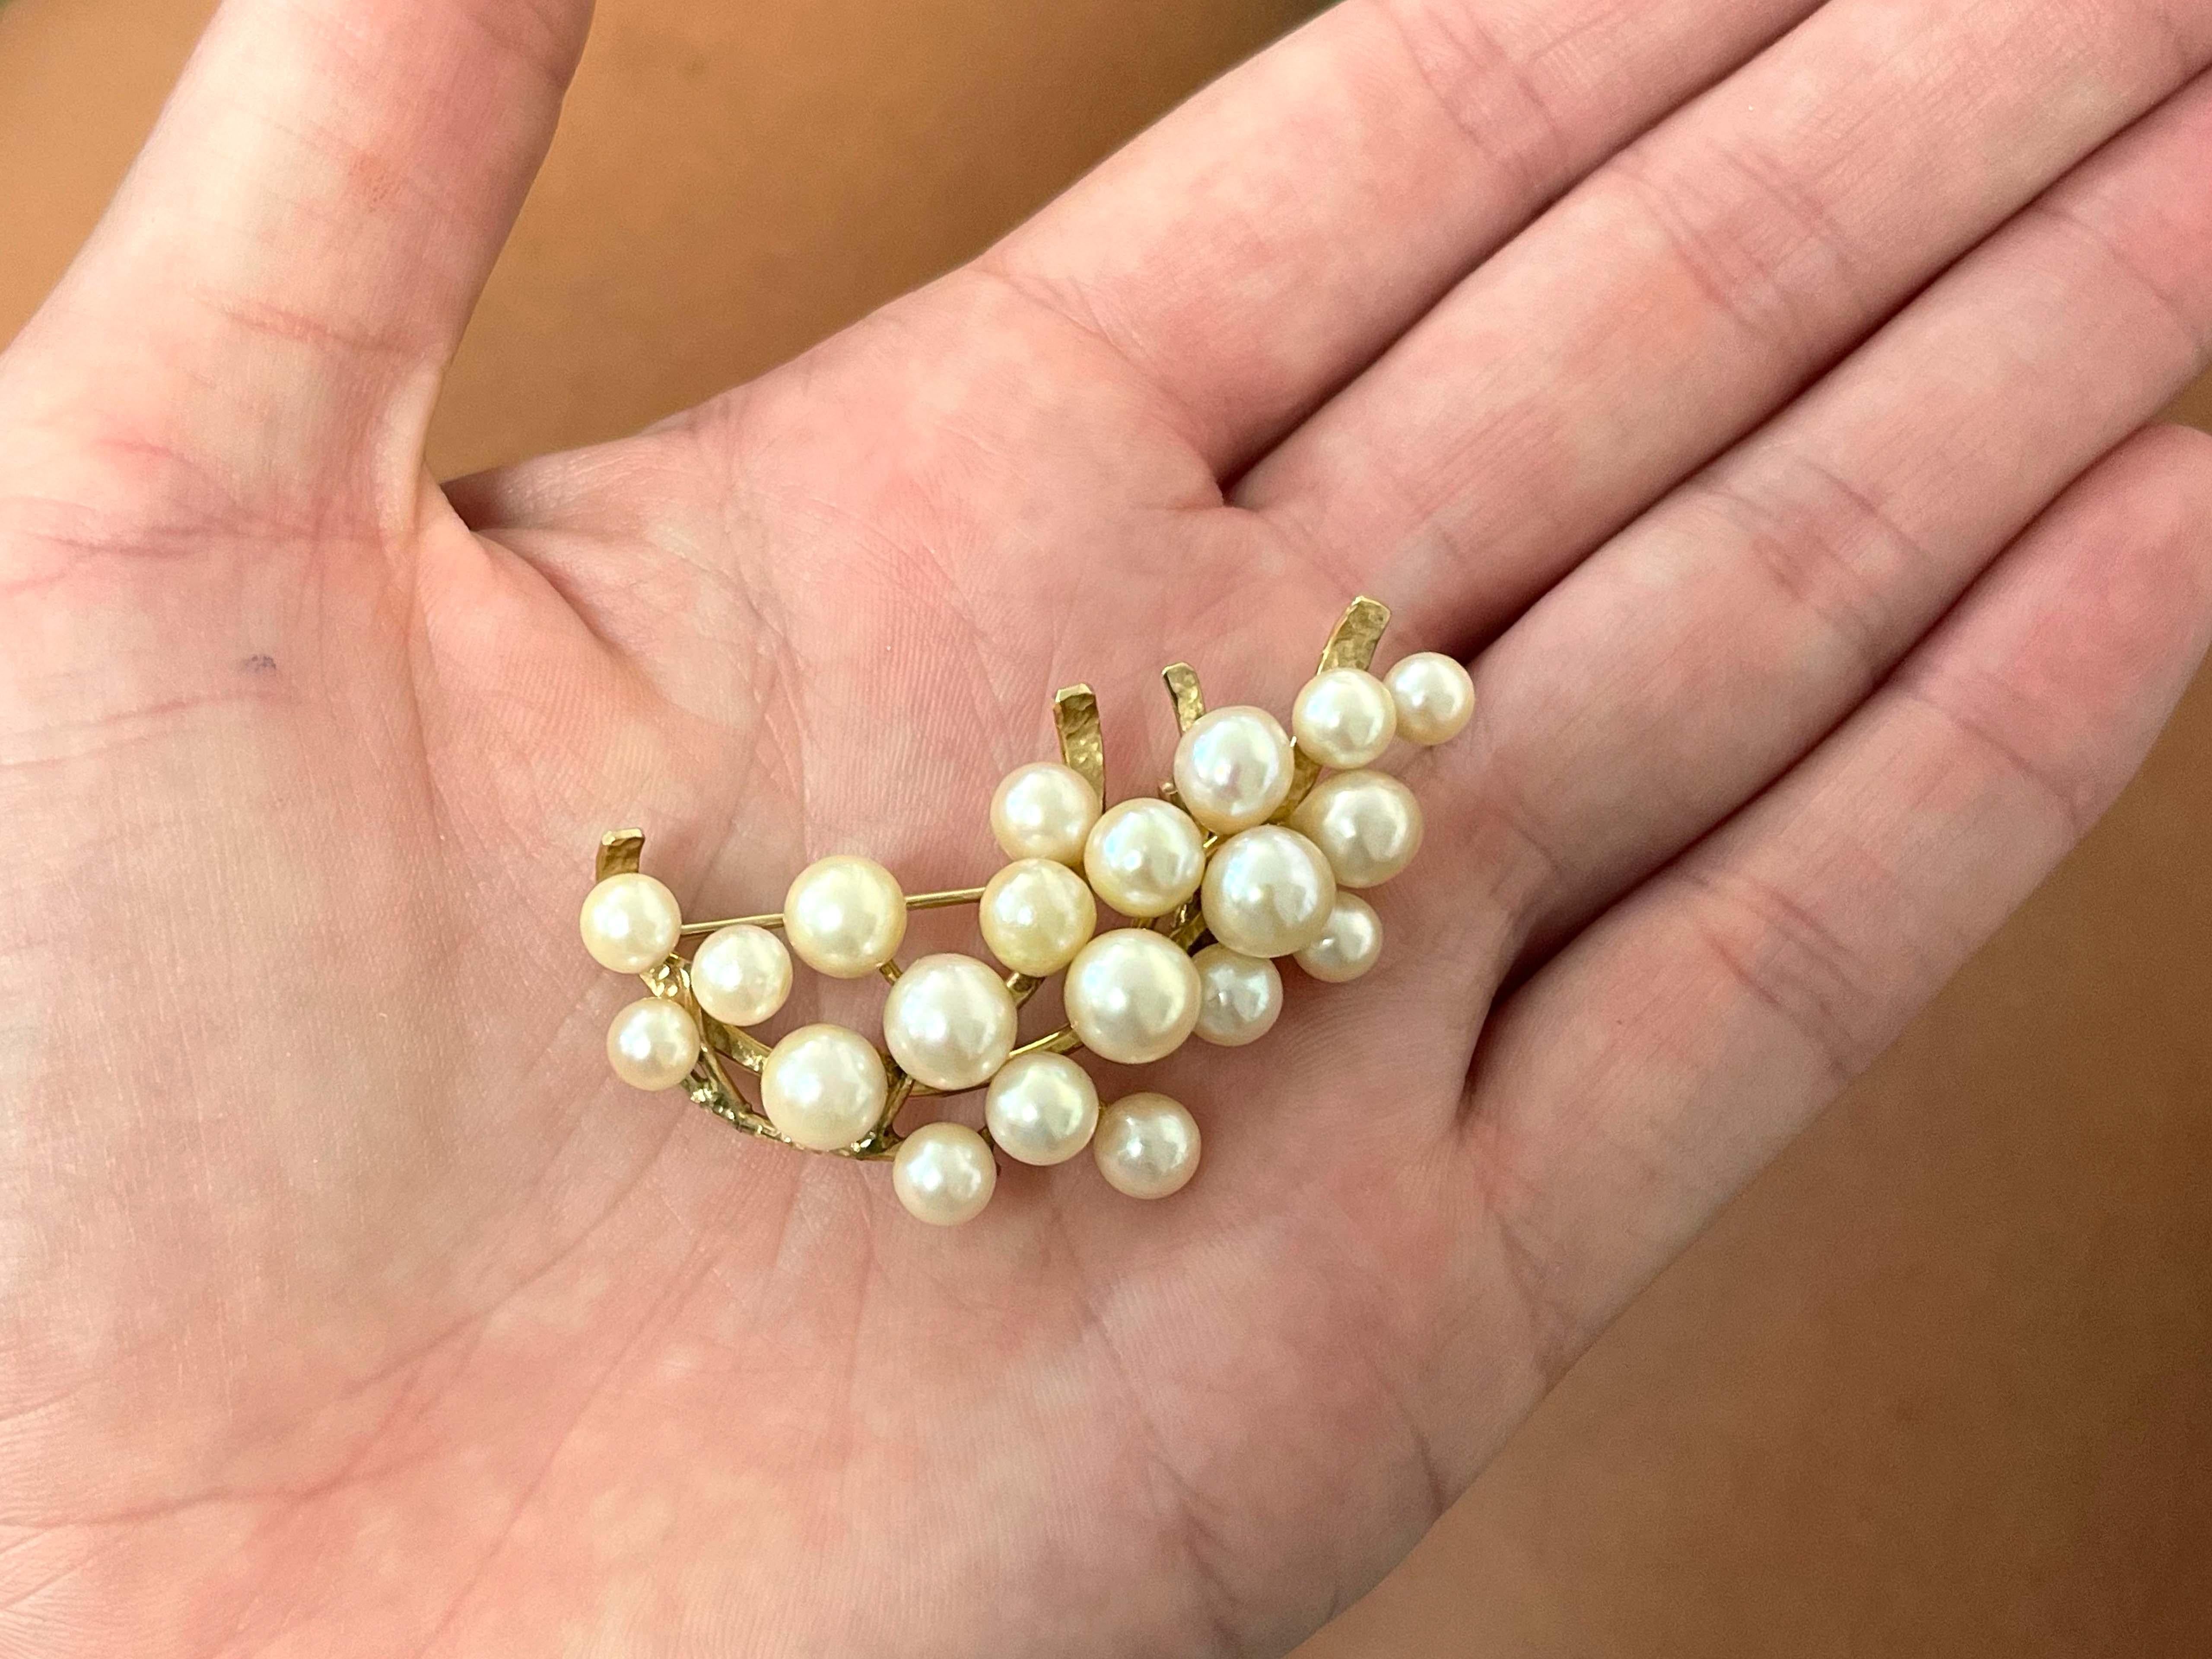 Brooch Specifications:

Designer: Ming's

Metal: 14k Yellow Gold

Pearls: Akoya Pearls

Total Weight: 11.4 Grams

Brooch Measurements: 2